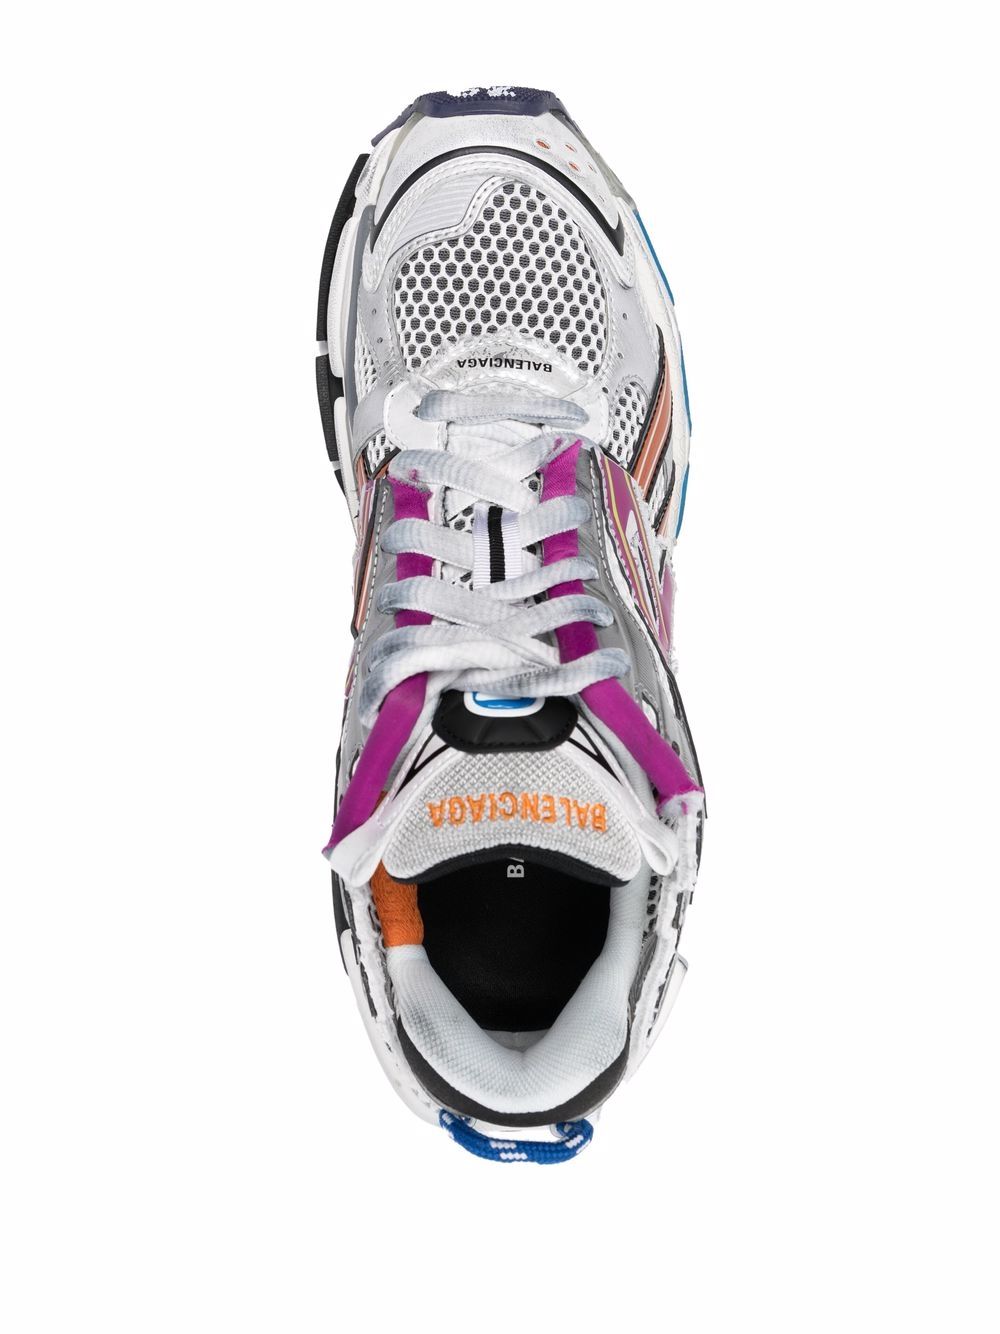 Sneakers basse Runner multicolor con pannelli